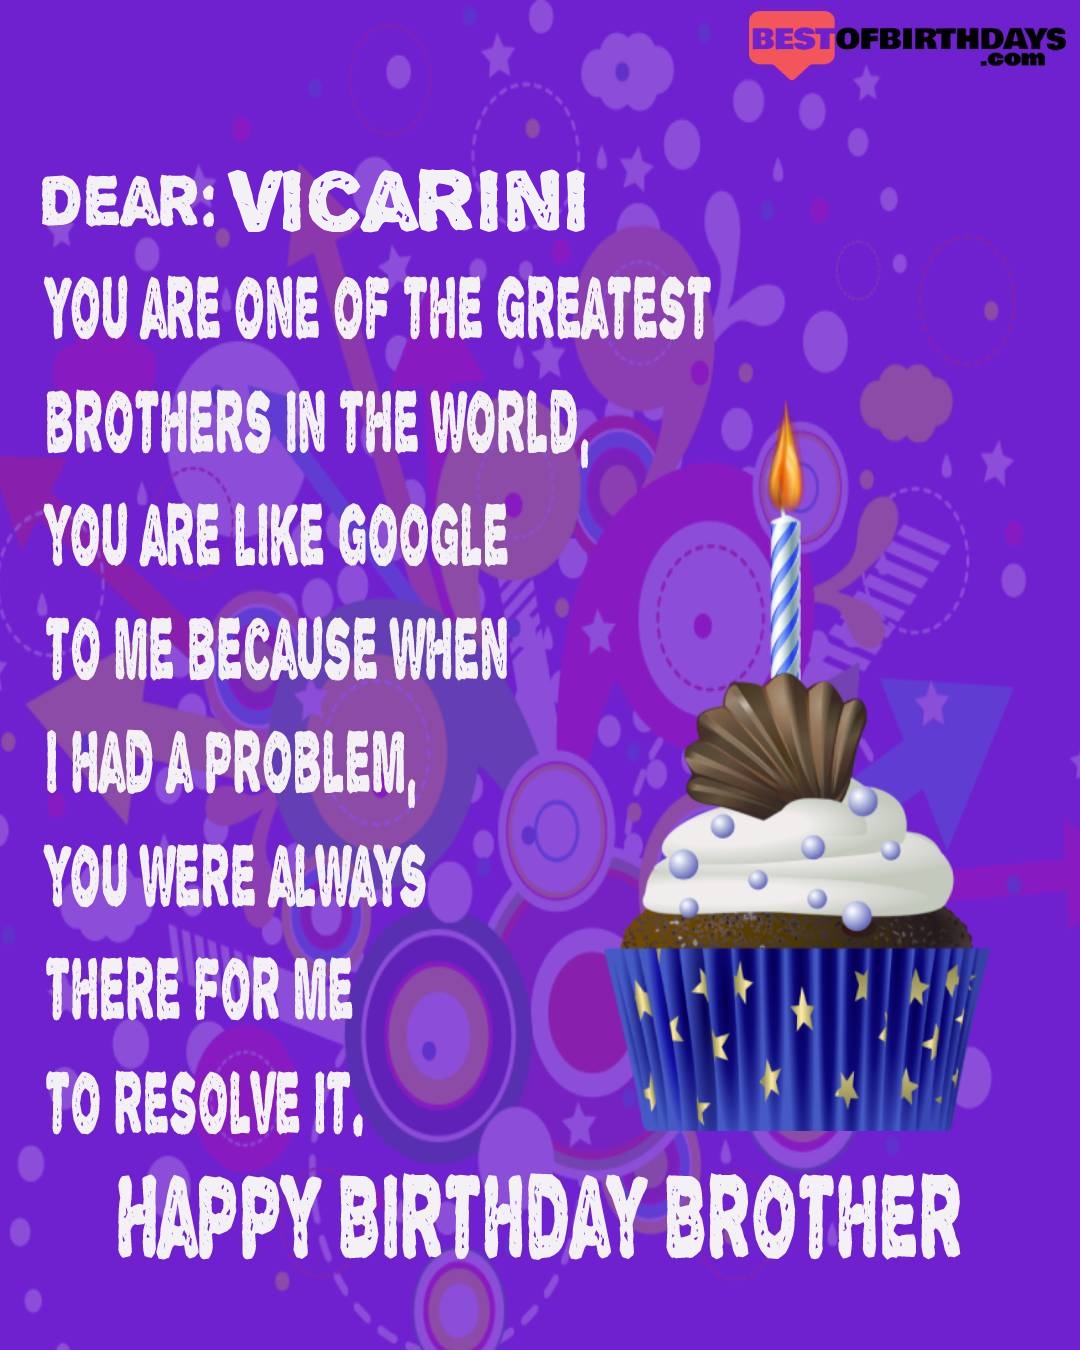 Happy birthday vicarini bhai brother bro